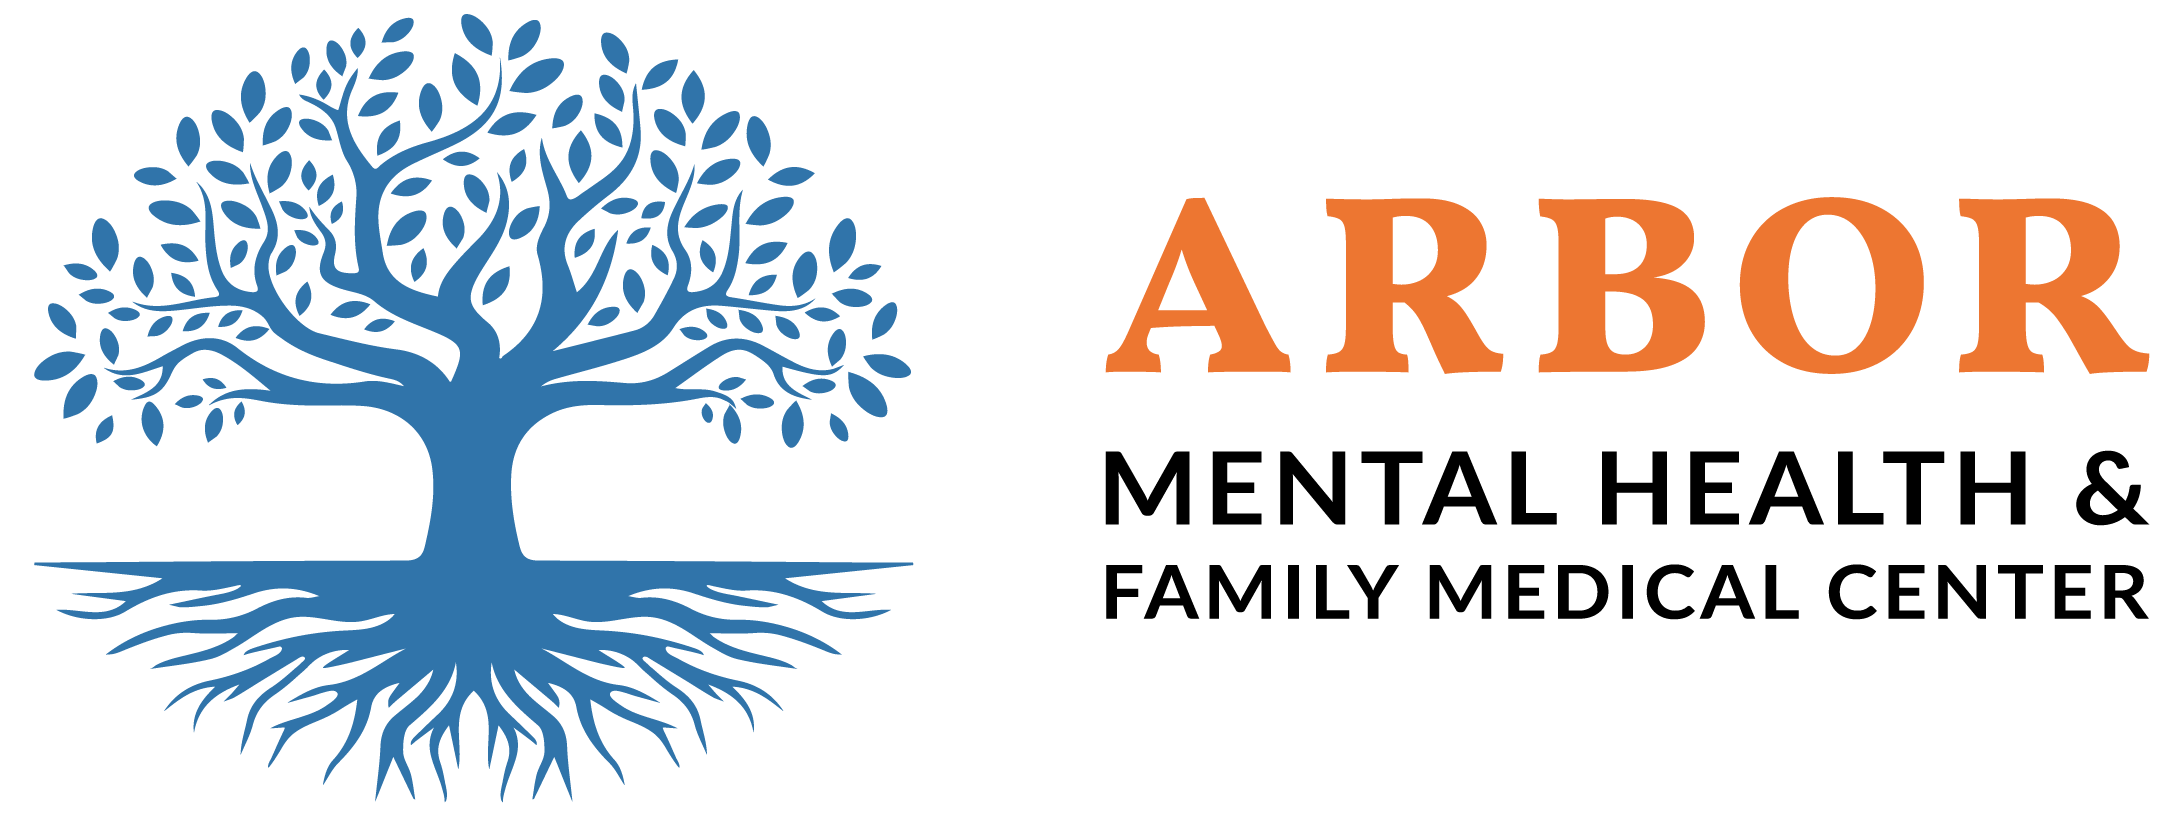 Arbor Mental Health & Family Medical Center LLC | San Antonio, Texas